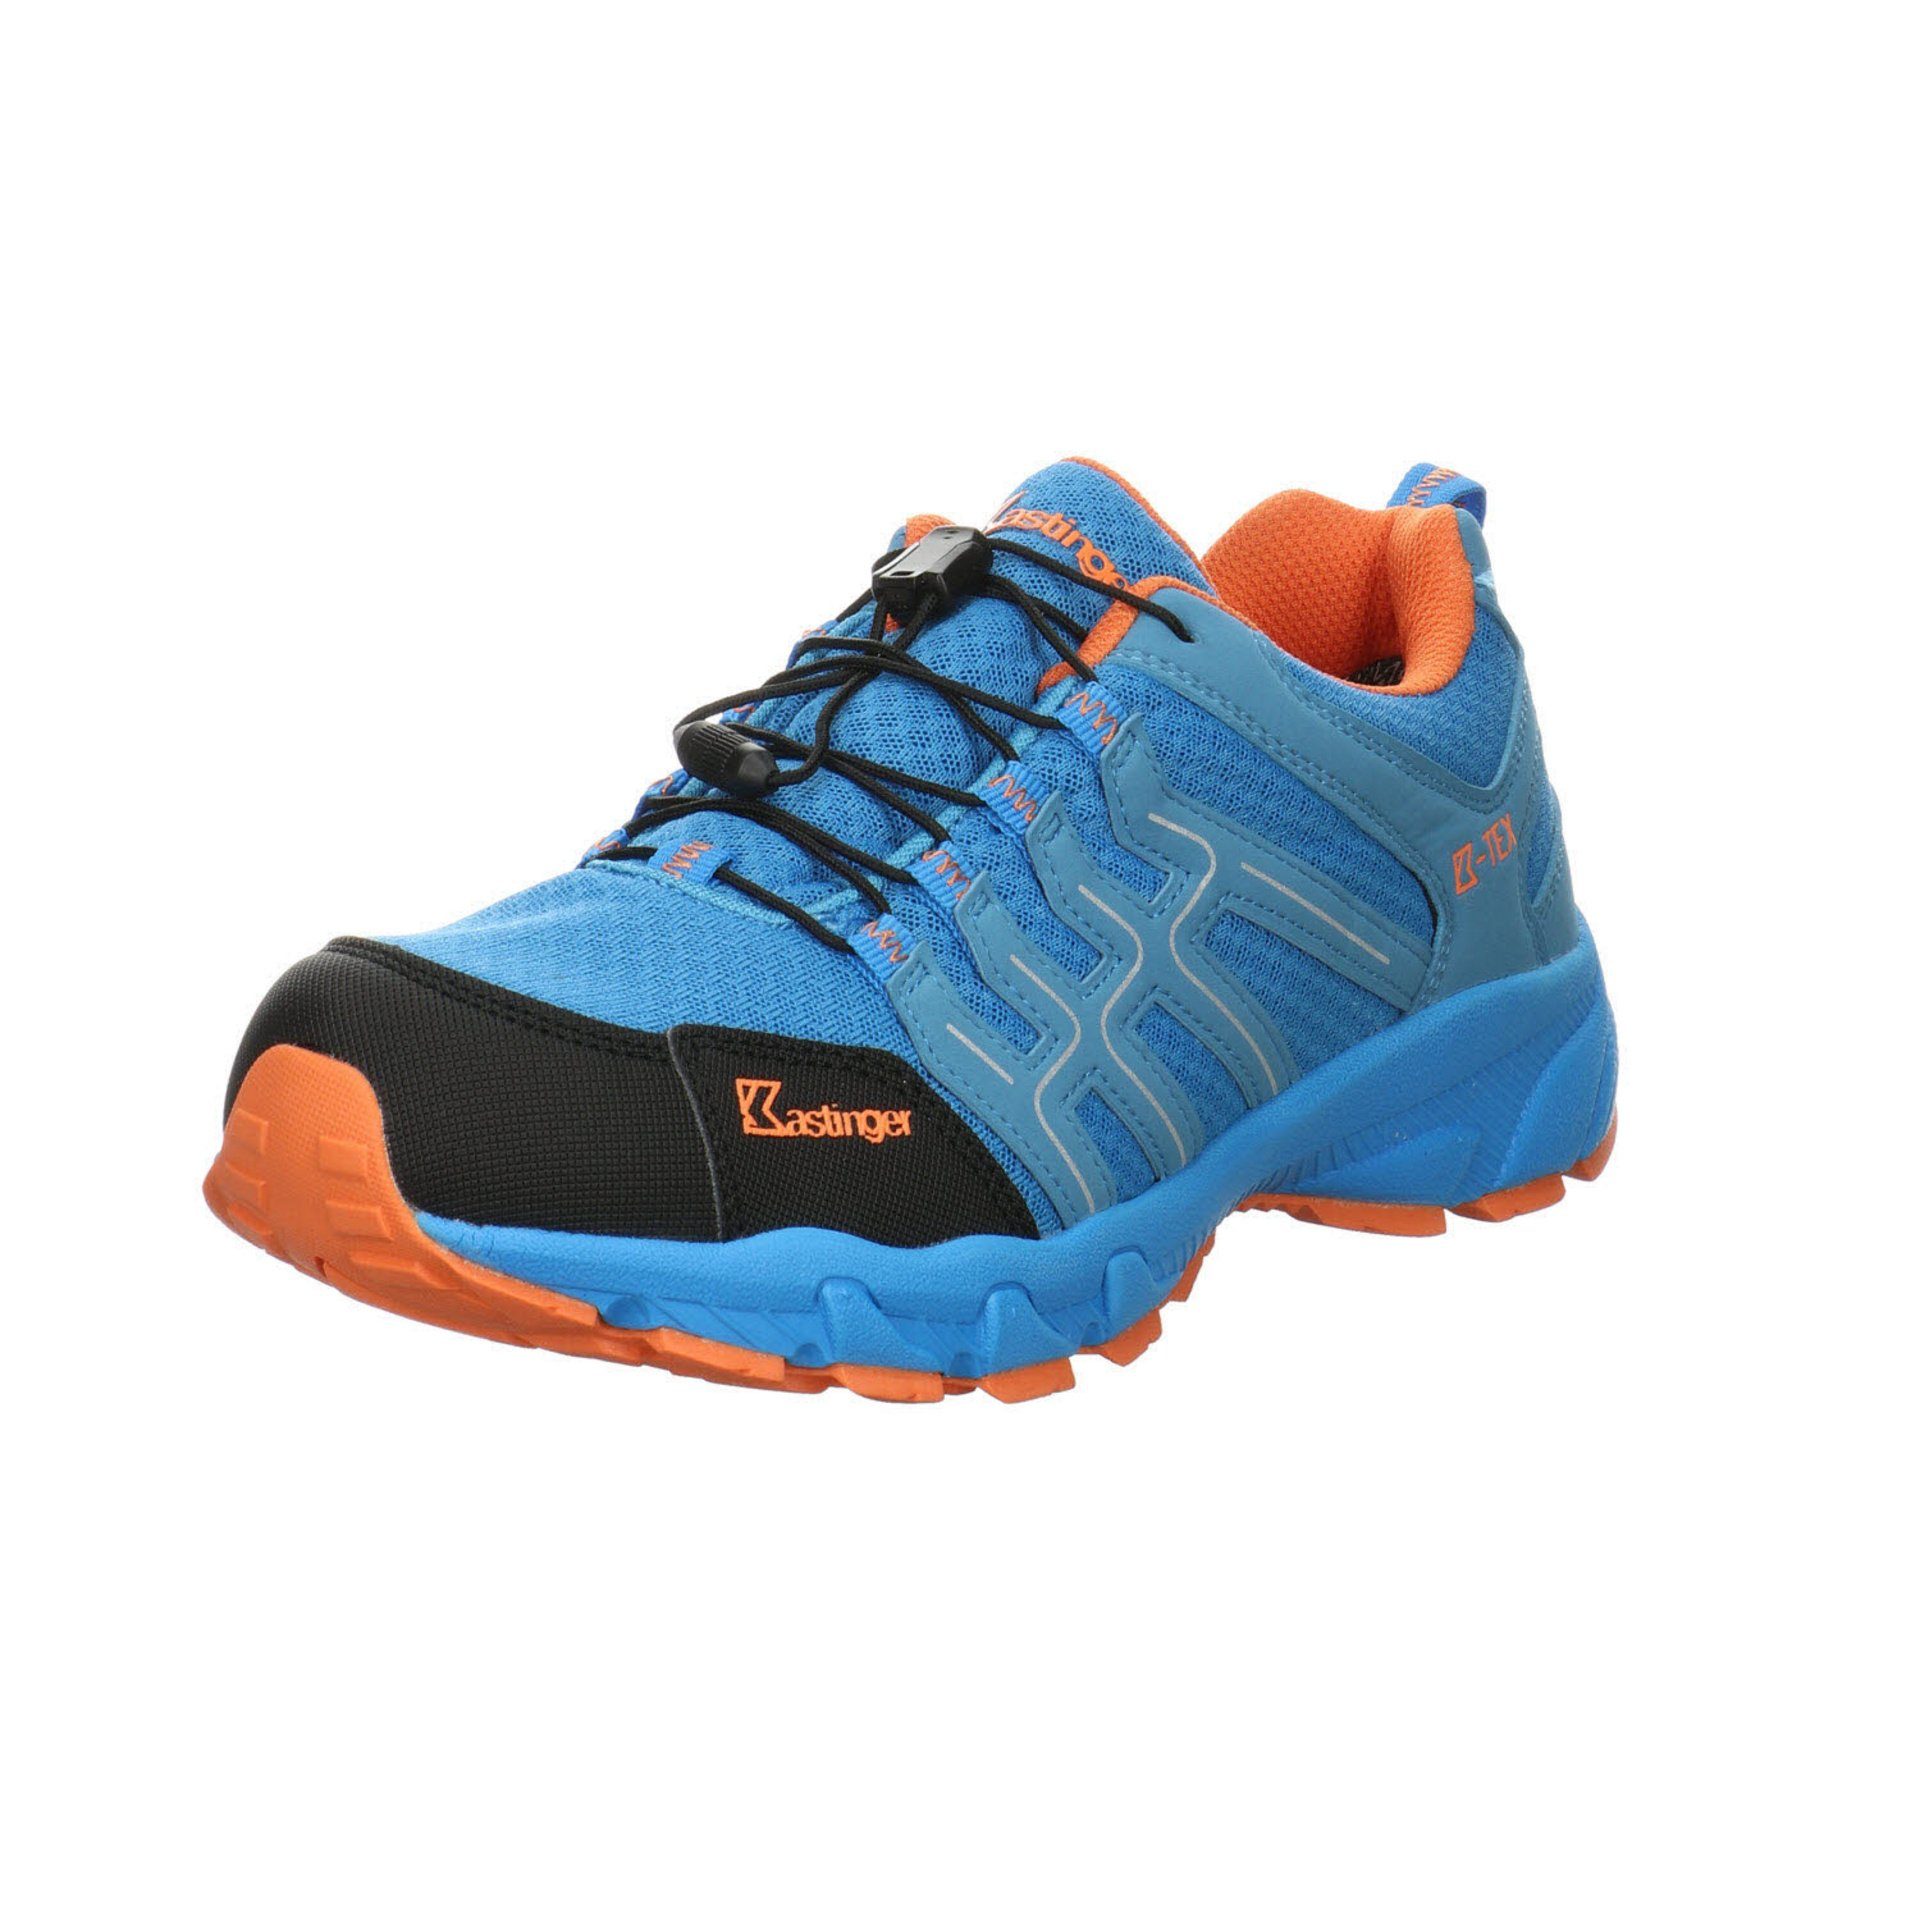 Kastinger Damen Schuhe Outdoor Trailrunner Outdoorschuh Outdoorschuh Synthetikkombination blue/orange